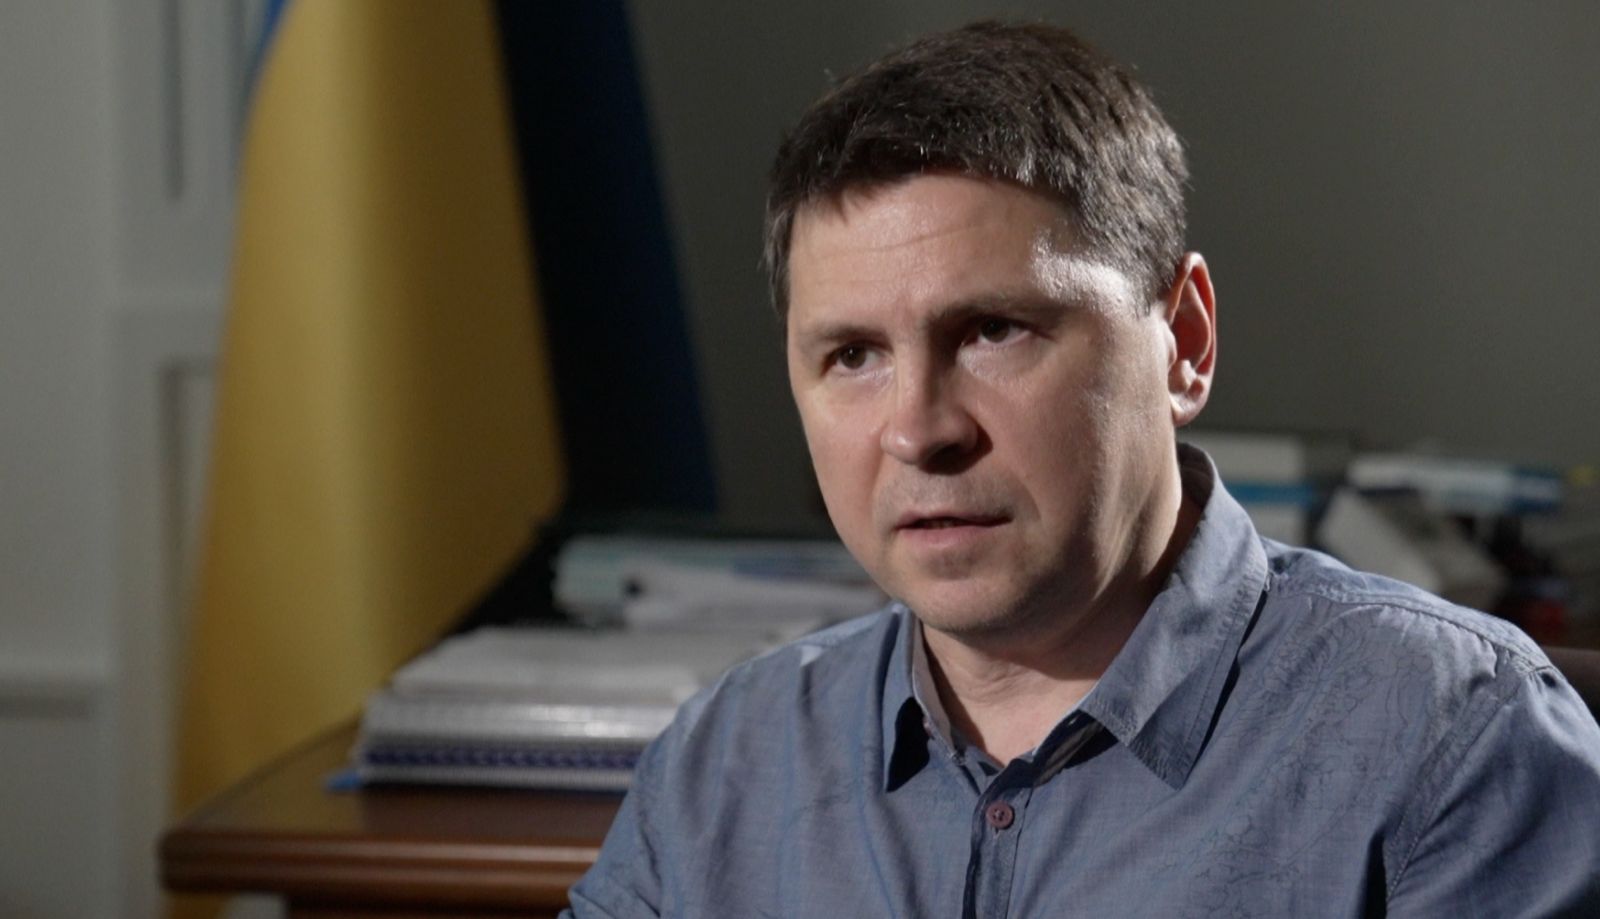 Mykhailo Podolyak, adviser to Ukrainian president